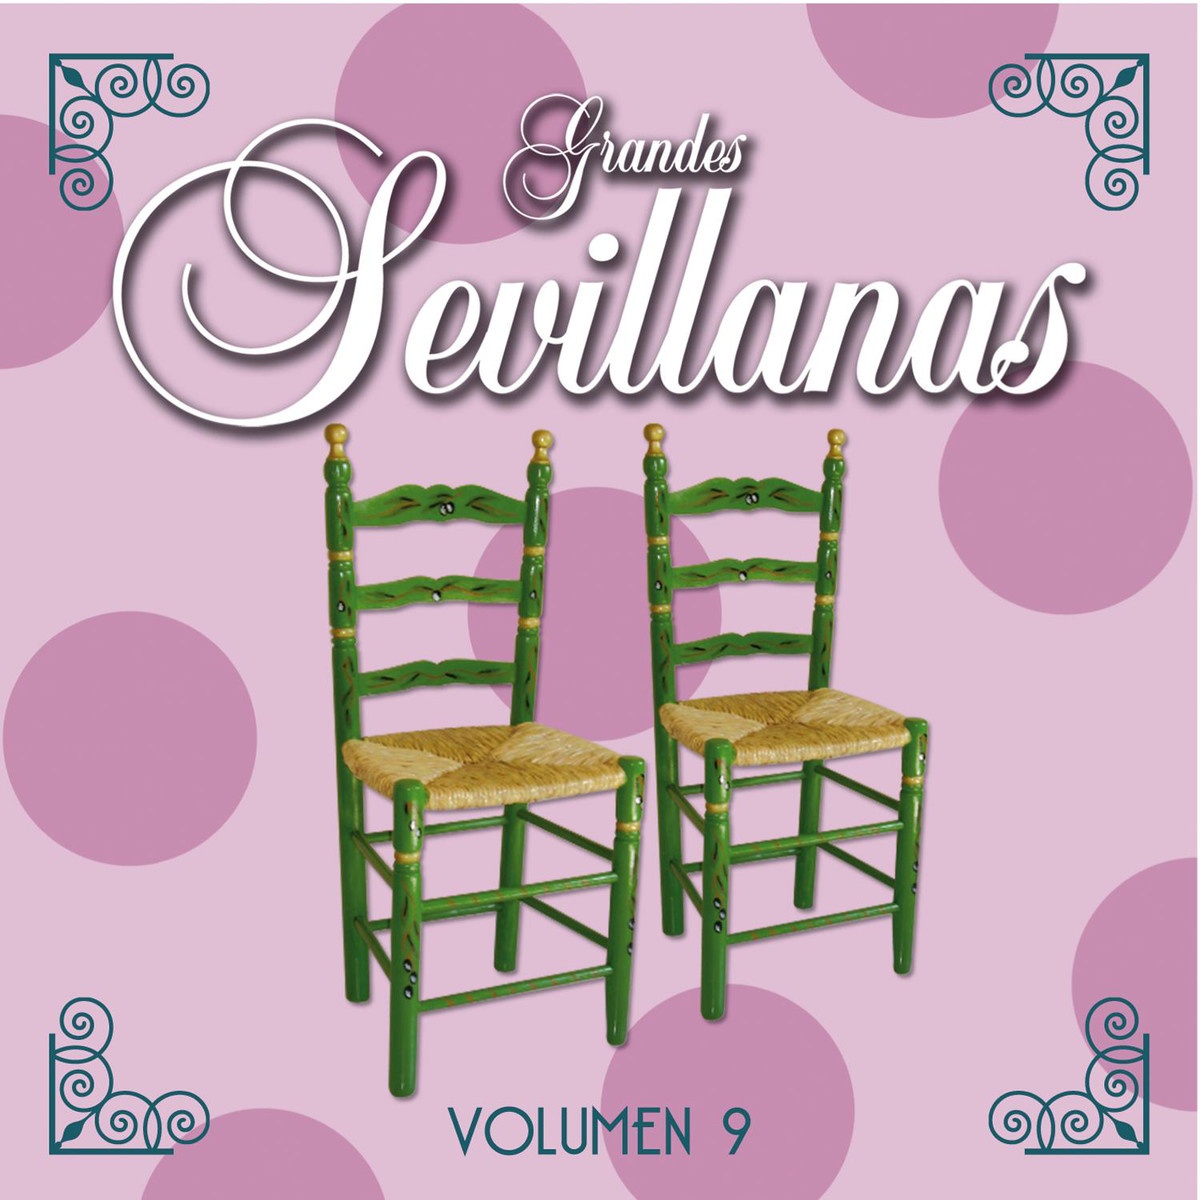 Grandes Sevillanas - Vol. 9